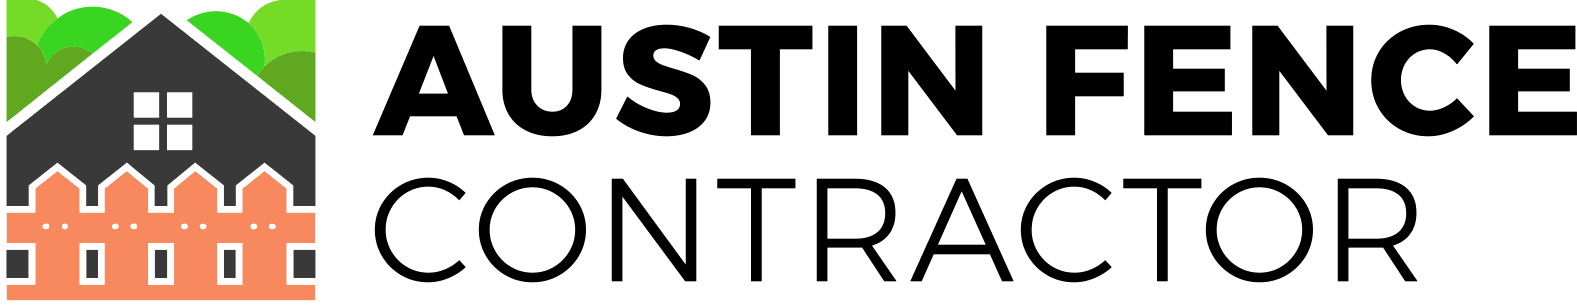 austin-fence-logo.png